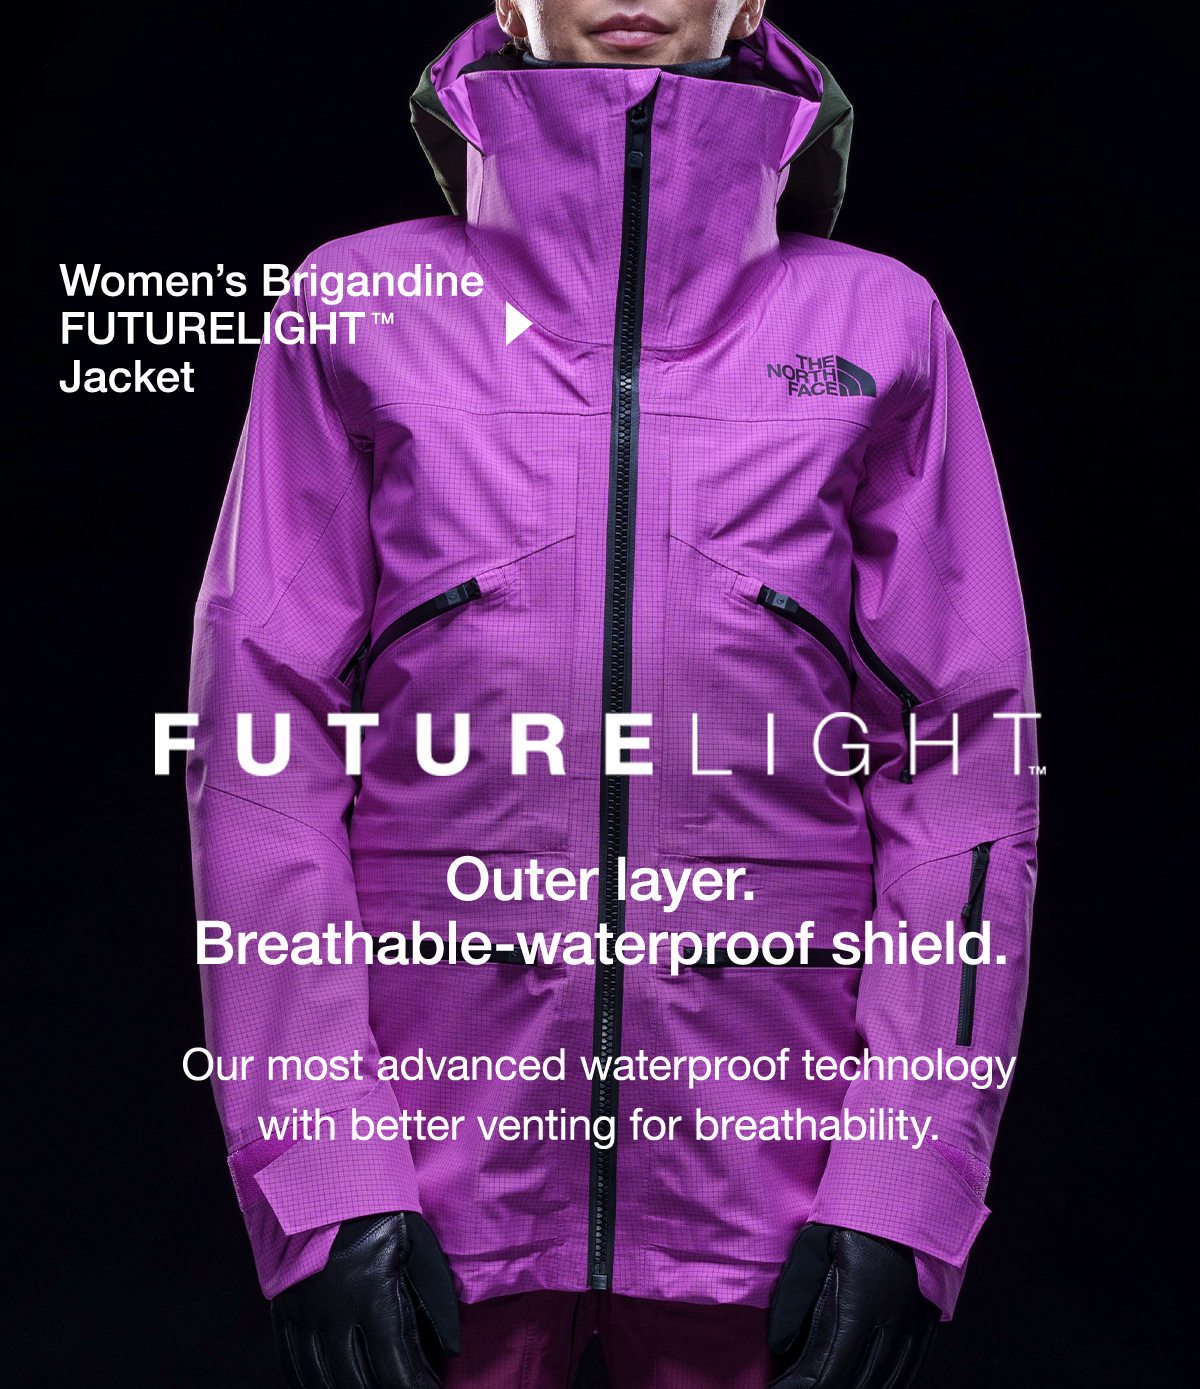 Women's Brigandine FUTURELIGHT Jacket